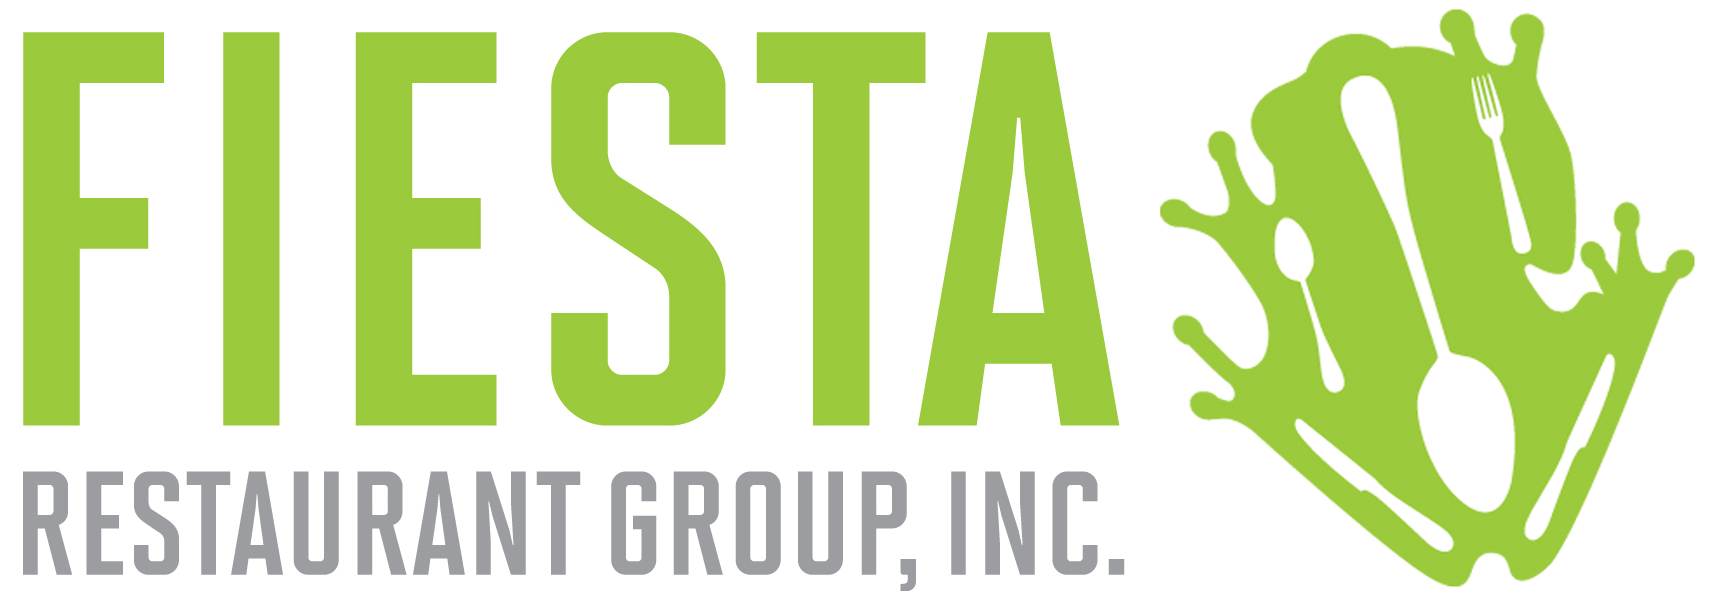 Fiesta Restaurant Group, Inc. logo